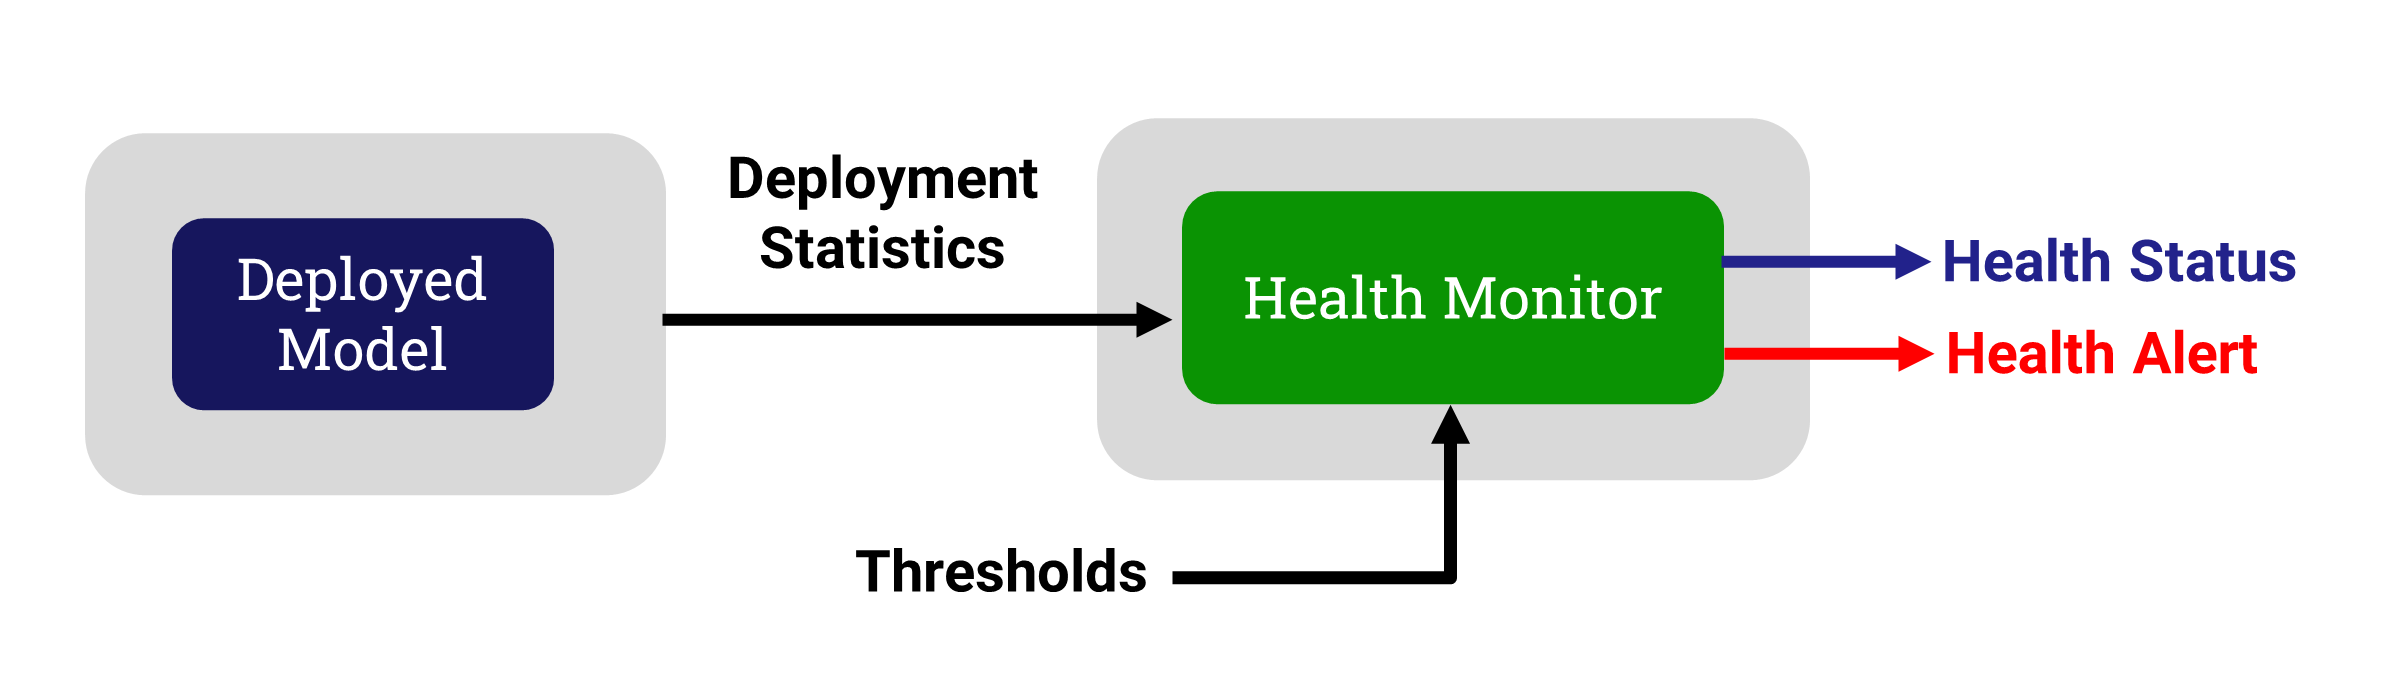 _images/Monitor_Block_Diagram_Health.png